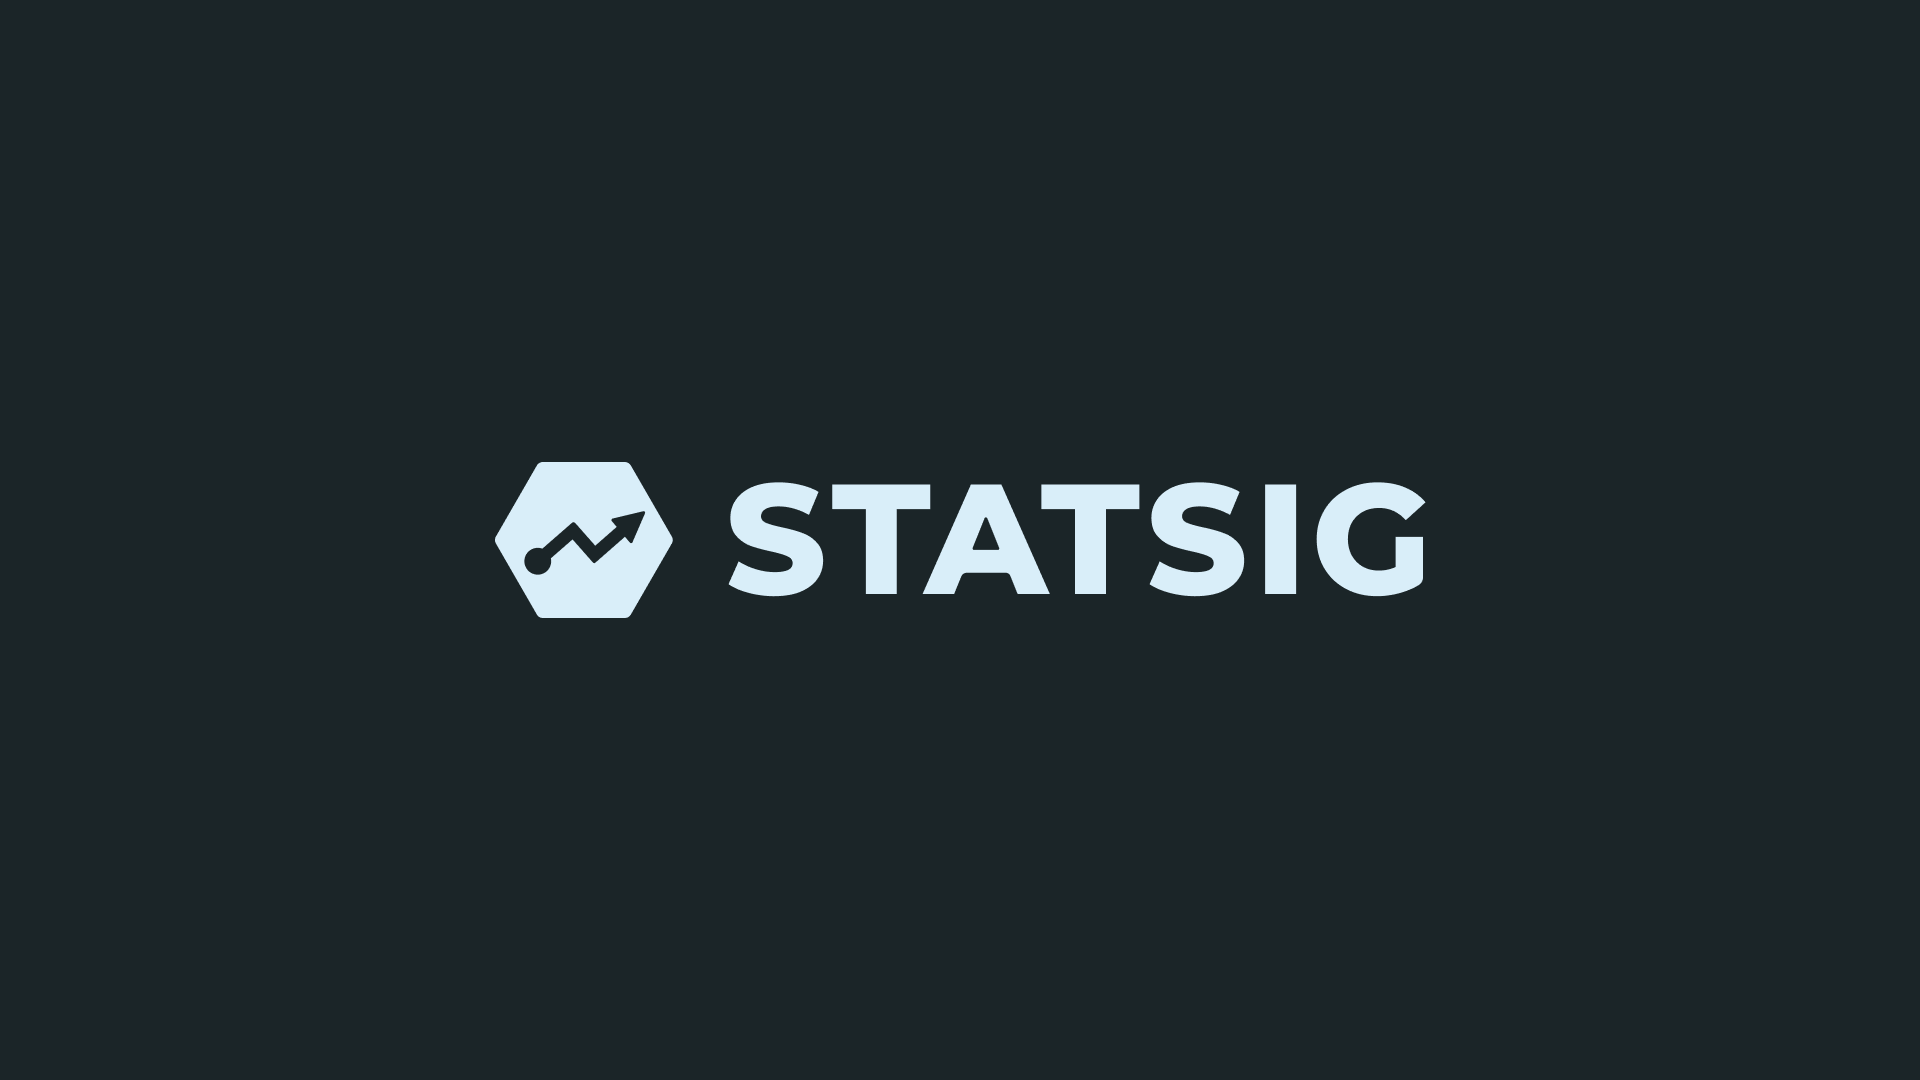 new statsig logo and colors